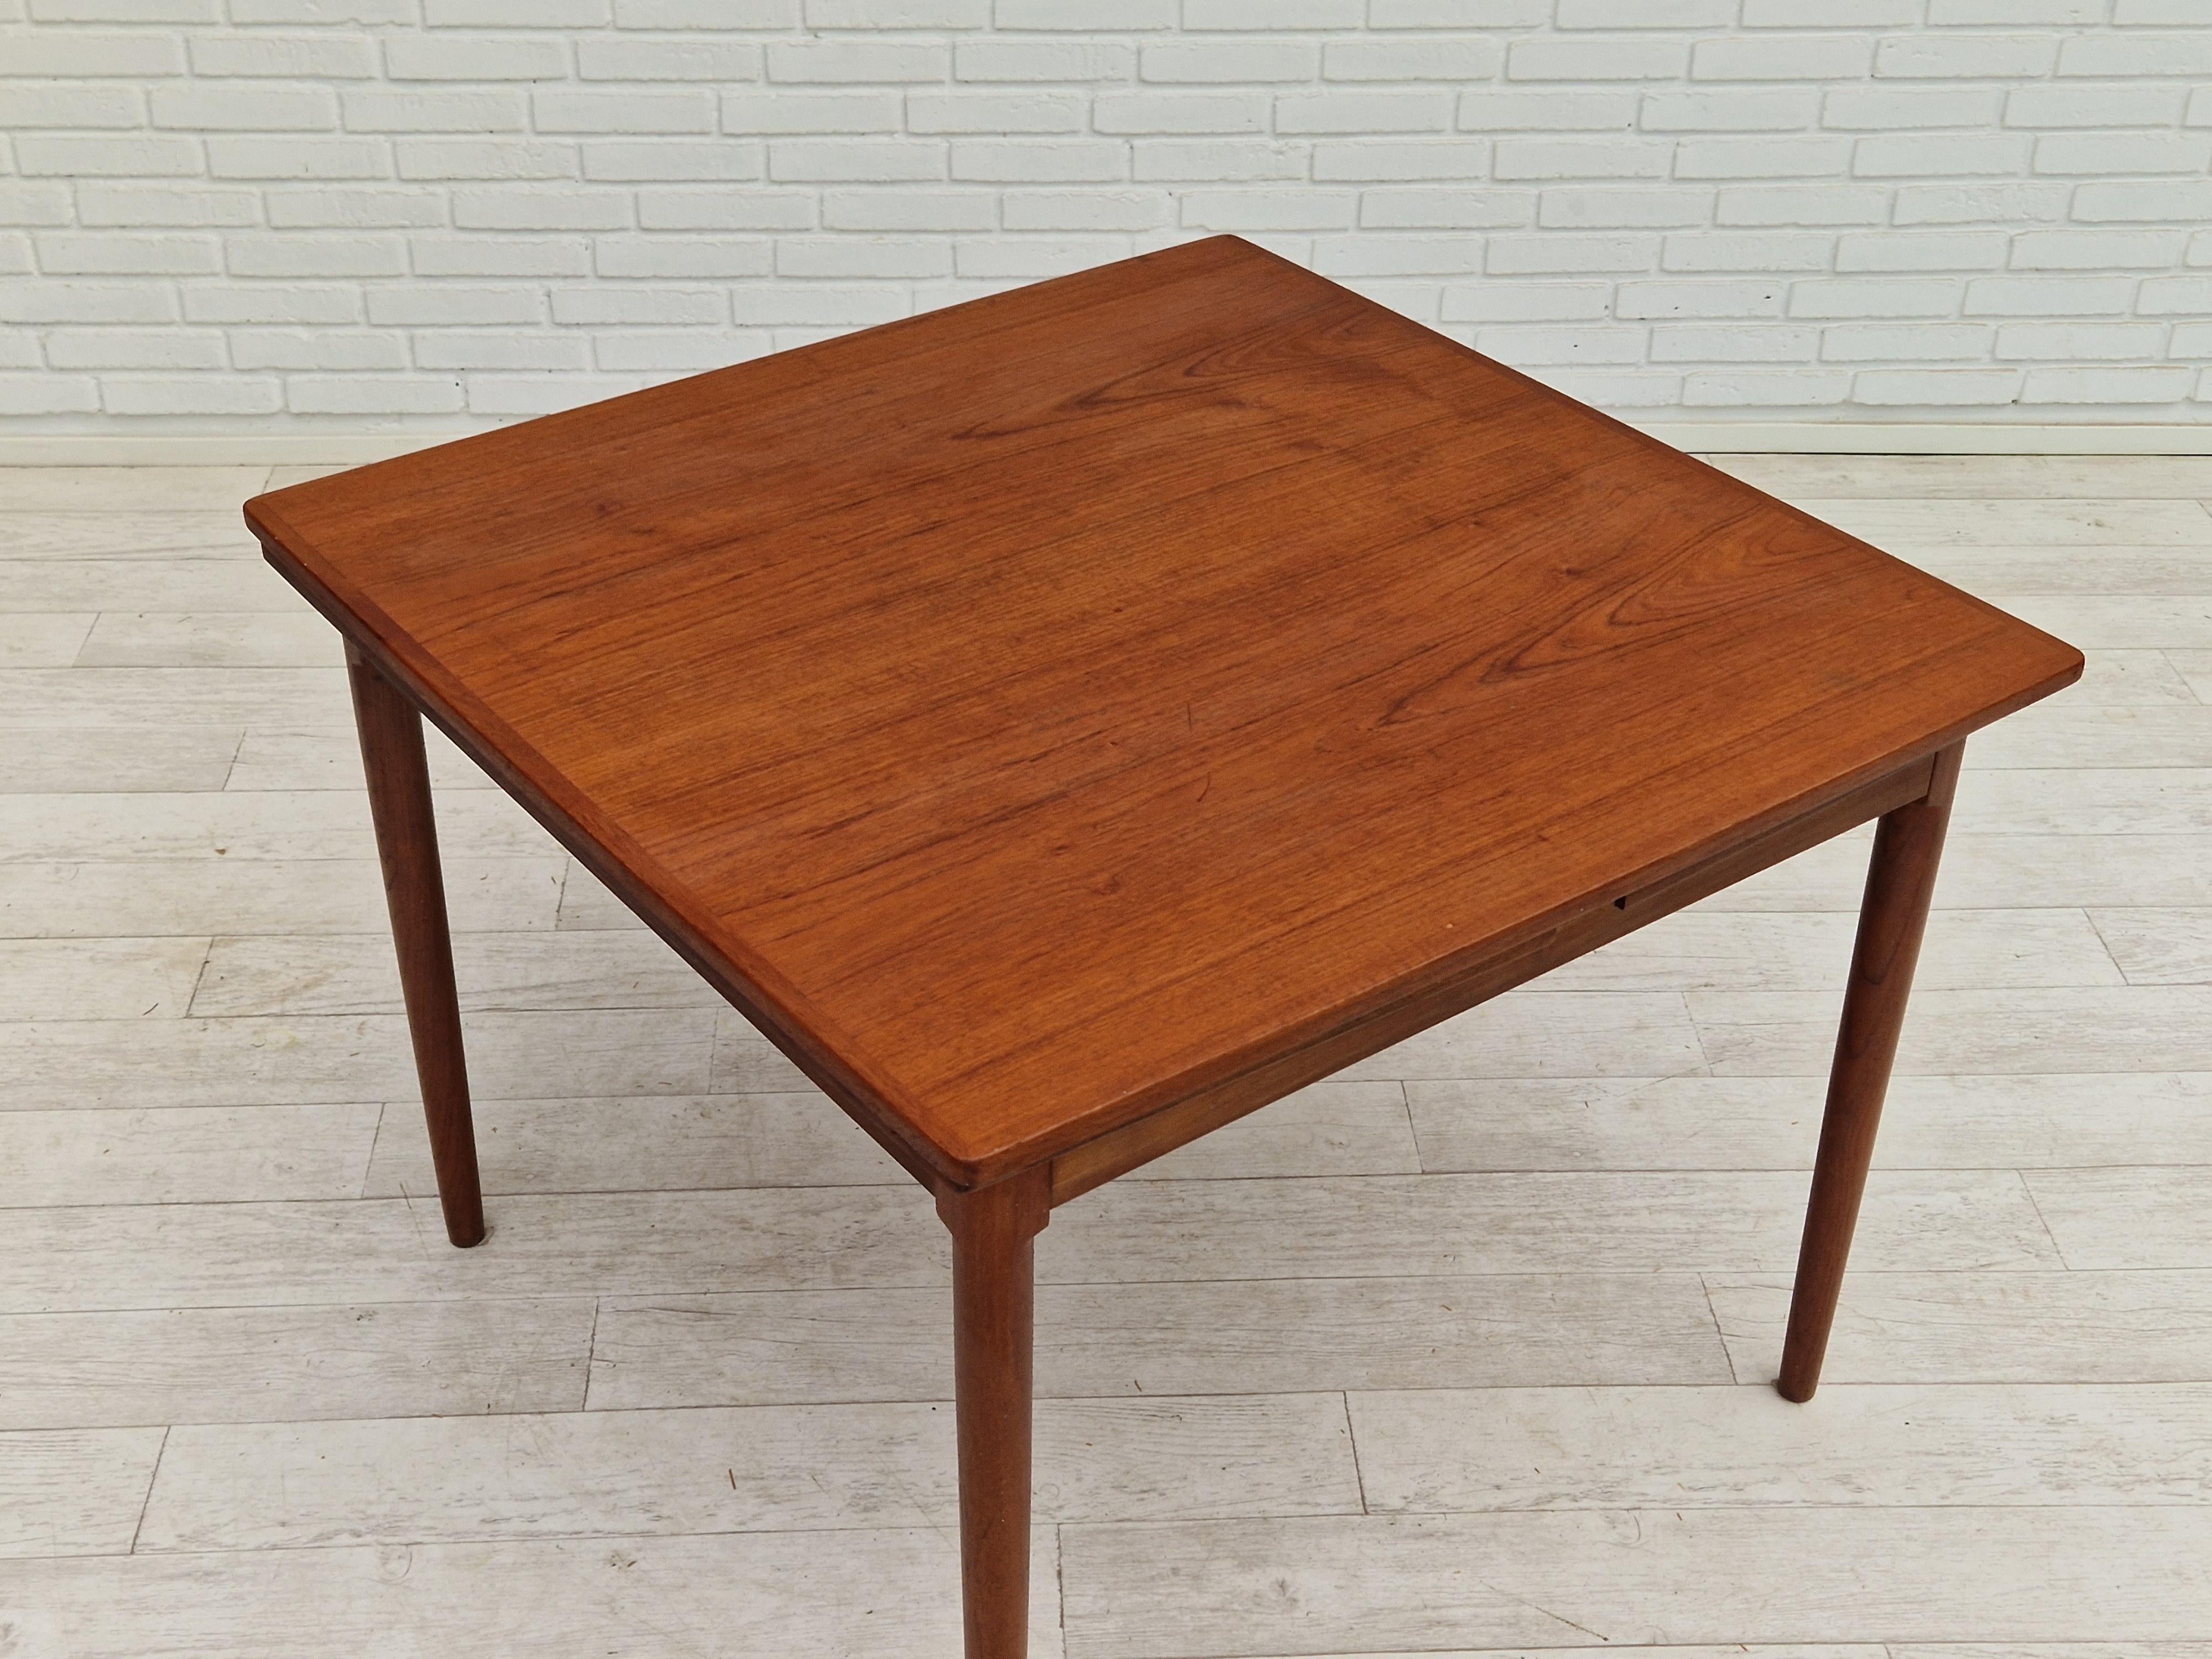 1960, Danish design, unfolded dining table, teak wood. 3